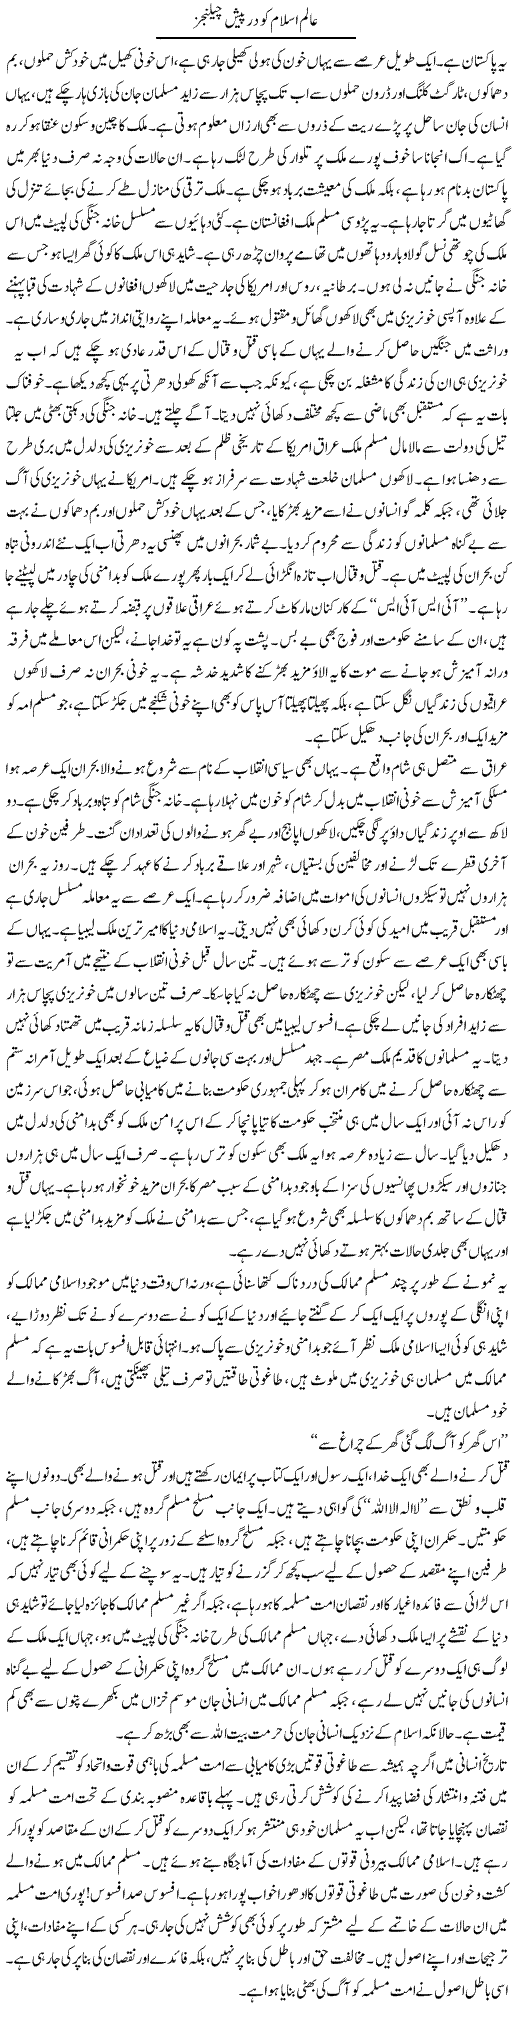 Alam e Islam Ko Darpaish Challanges | Abid Mehmood Azaam | Daily Urdu Columns